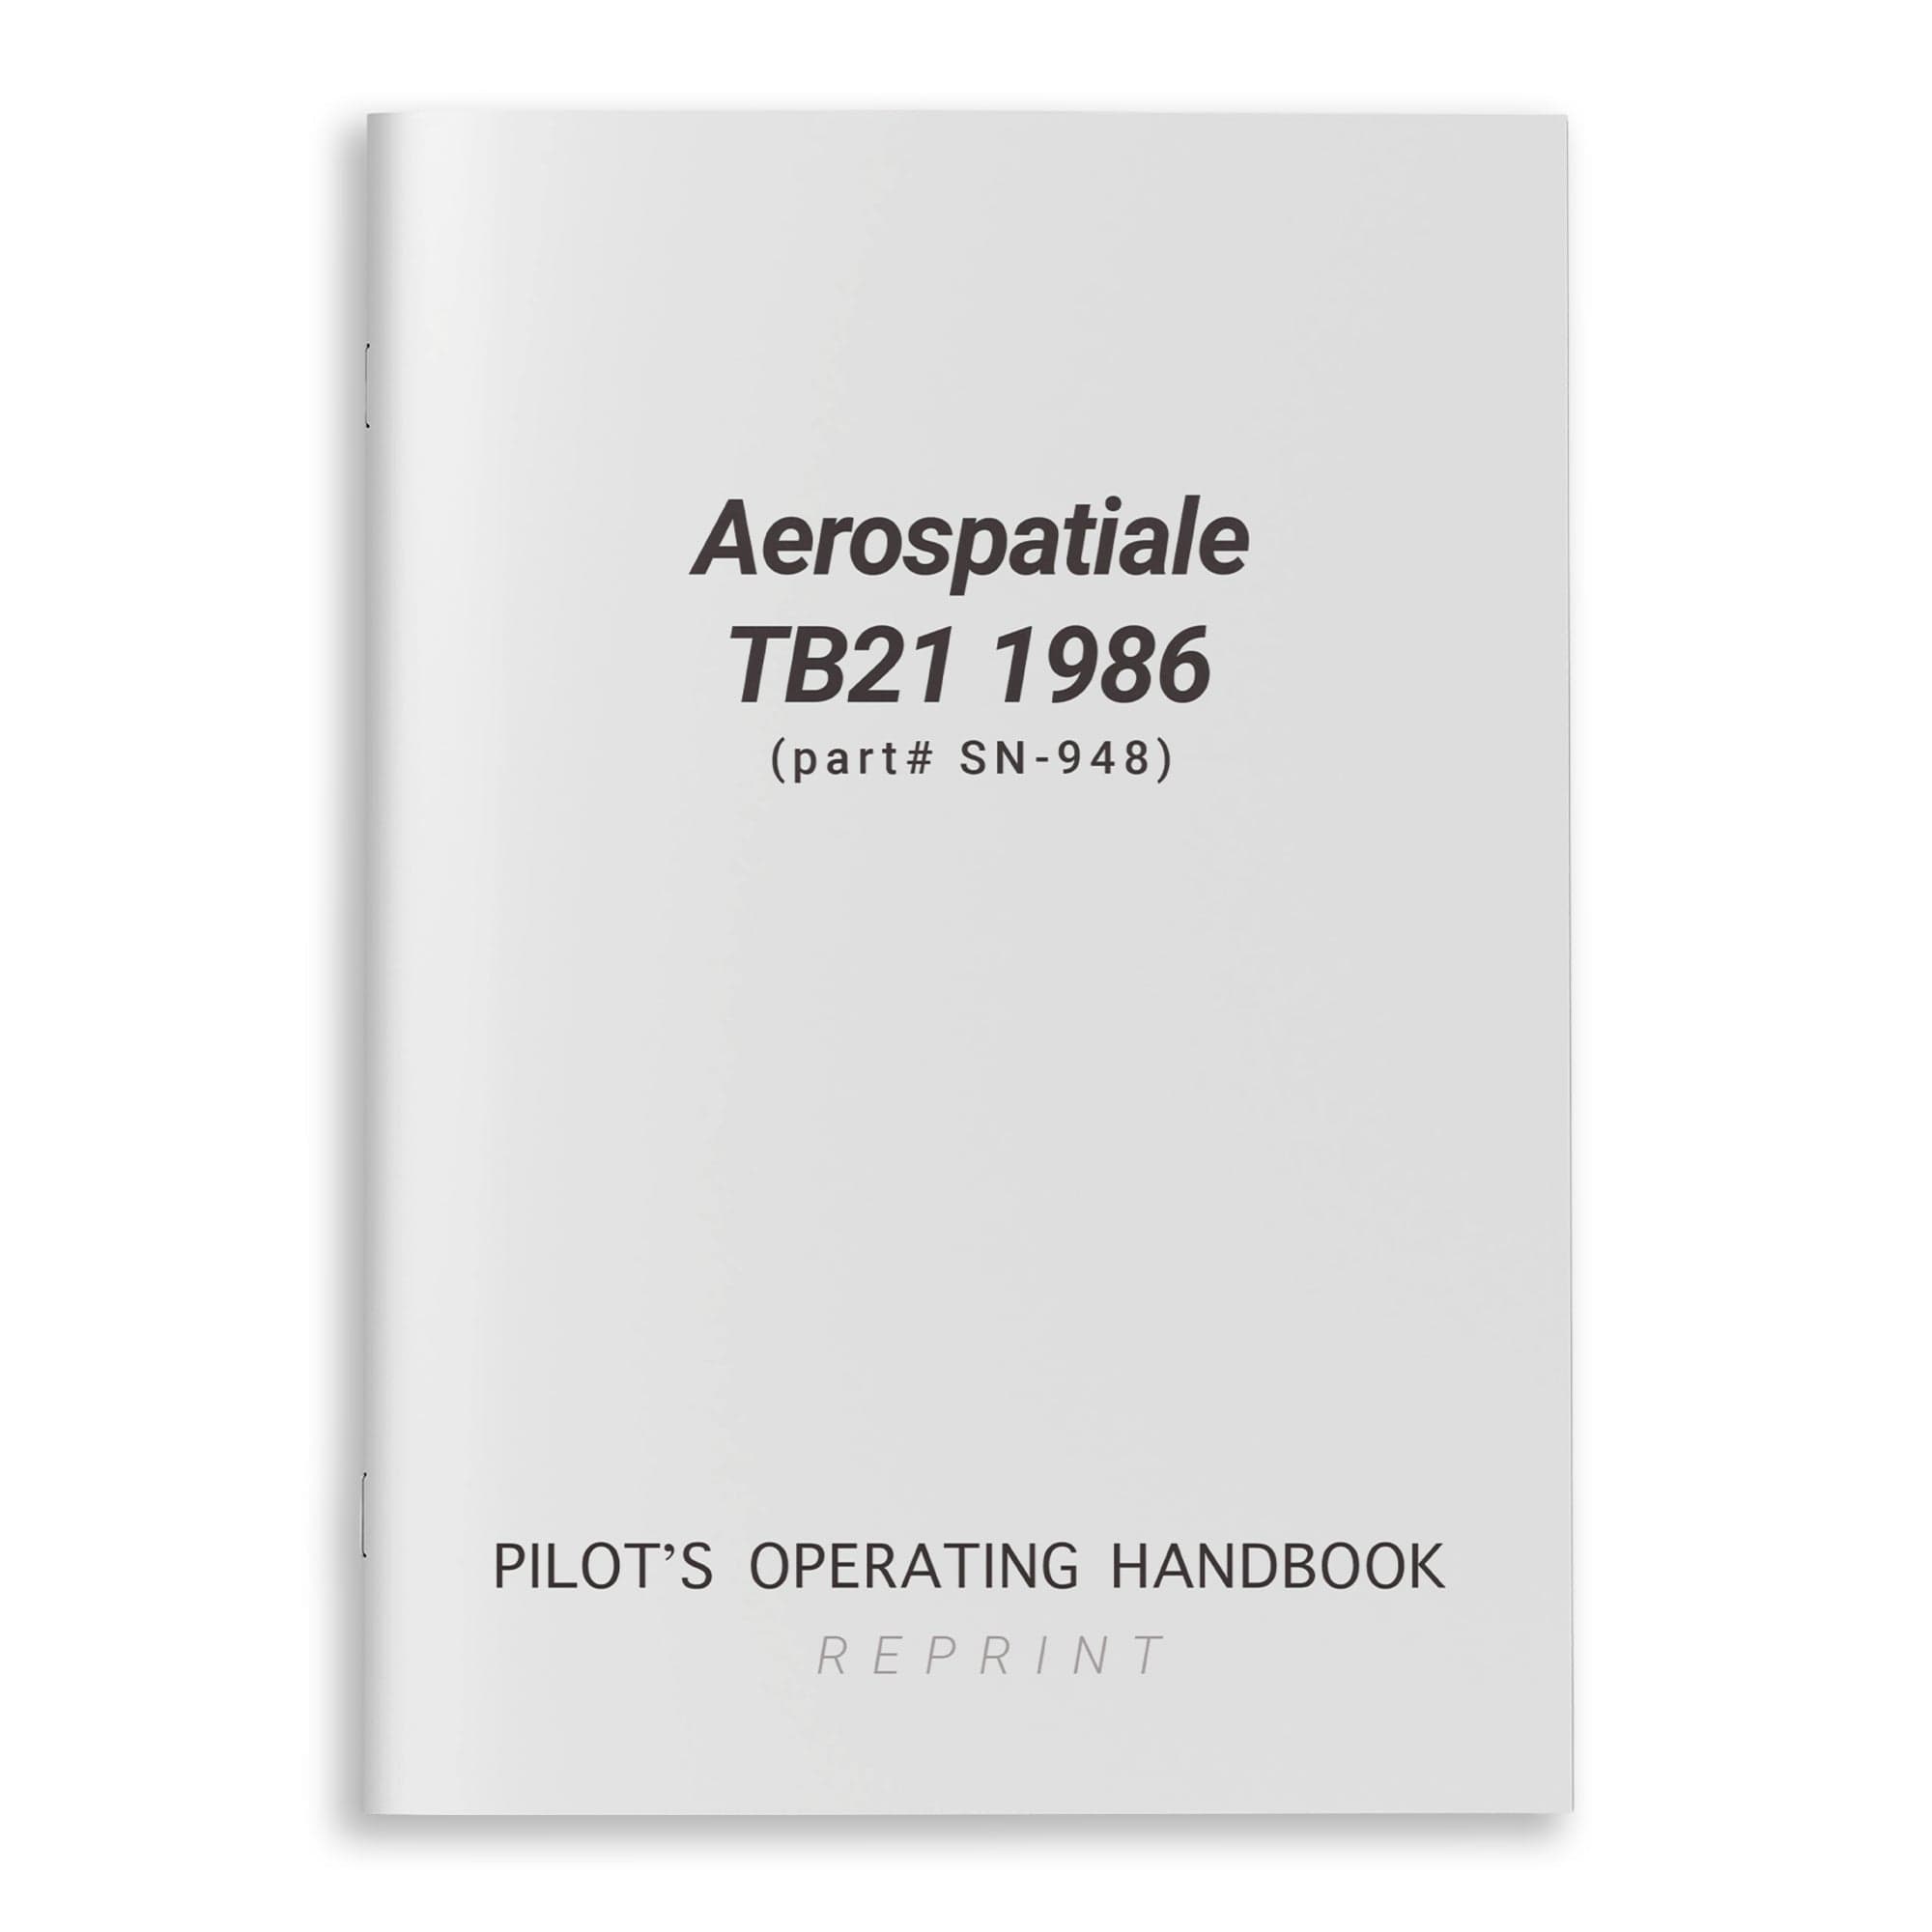 Aerospatiale TB21 1986 Pilot's Operating Handbook (part# SN-948)